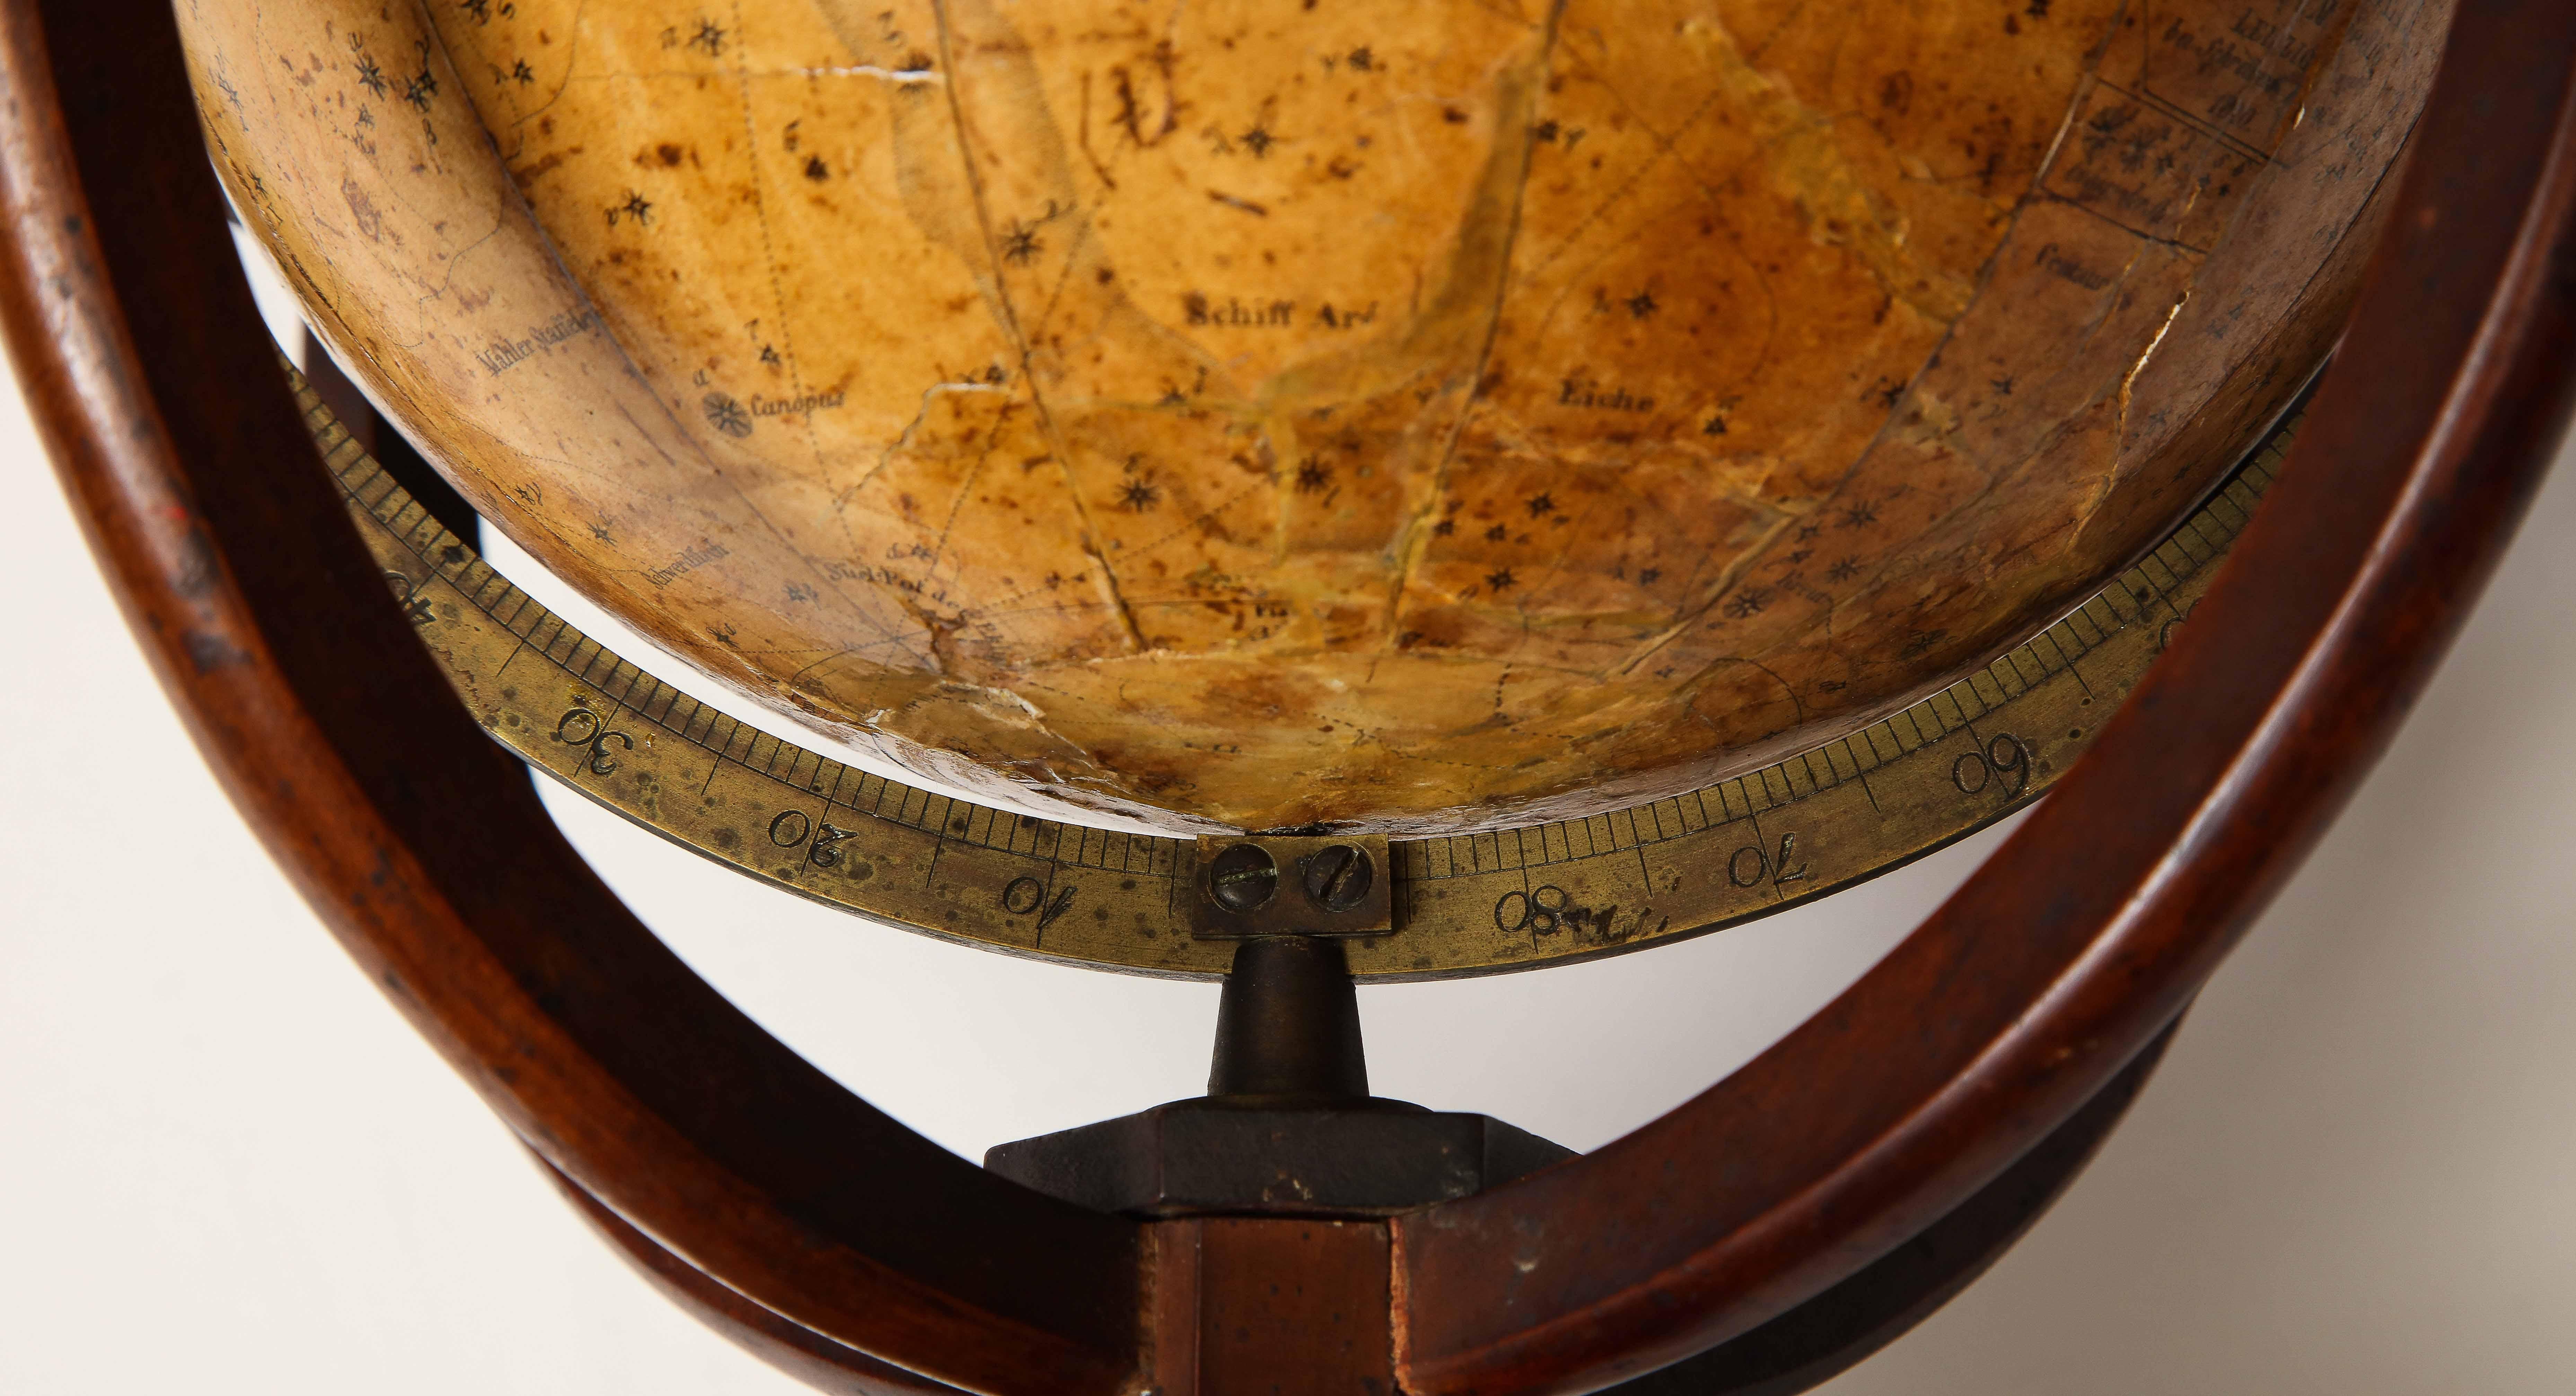 Celestial Globe by Schreiber, Leipzig, 1820 For Sale 8